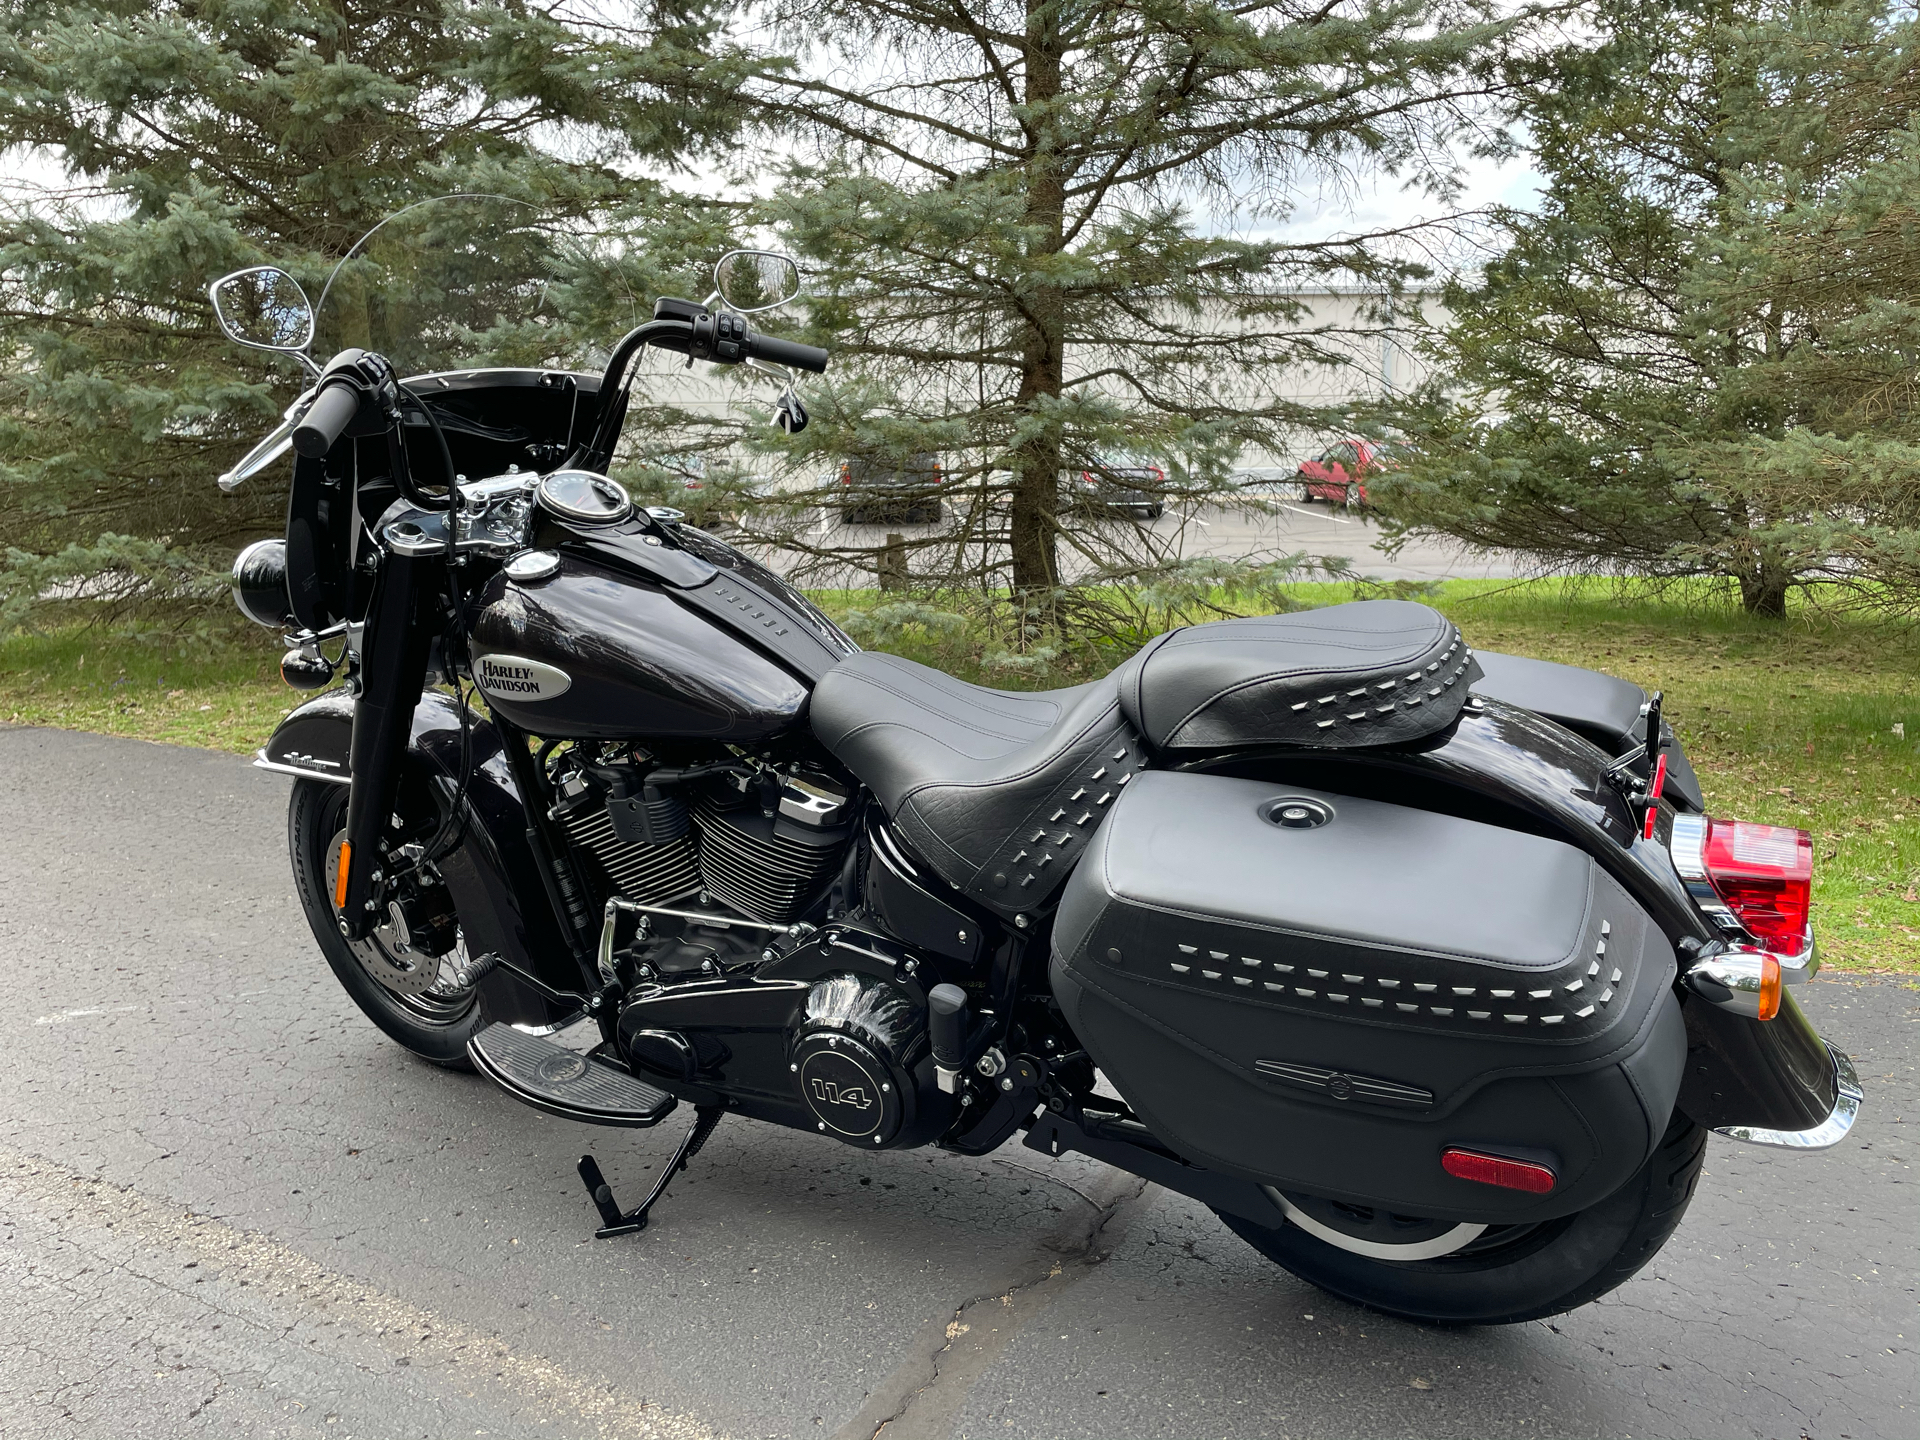 New 2021 Harley Davidson Heritage Classic 114 Motorcycles In Portage Mi 031063 Black Jack Metallic